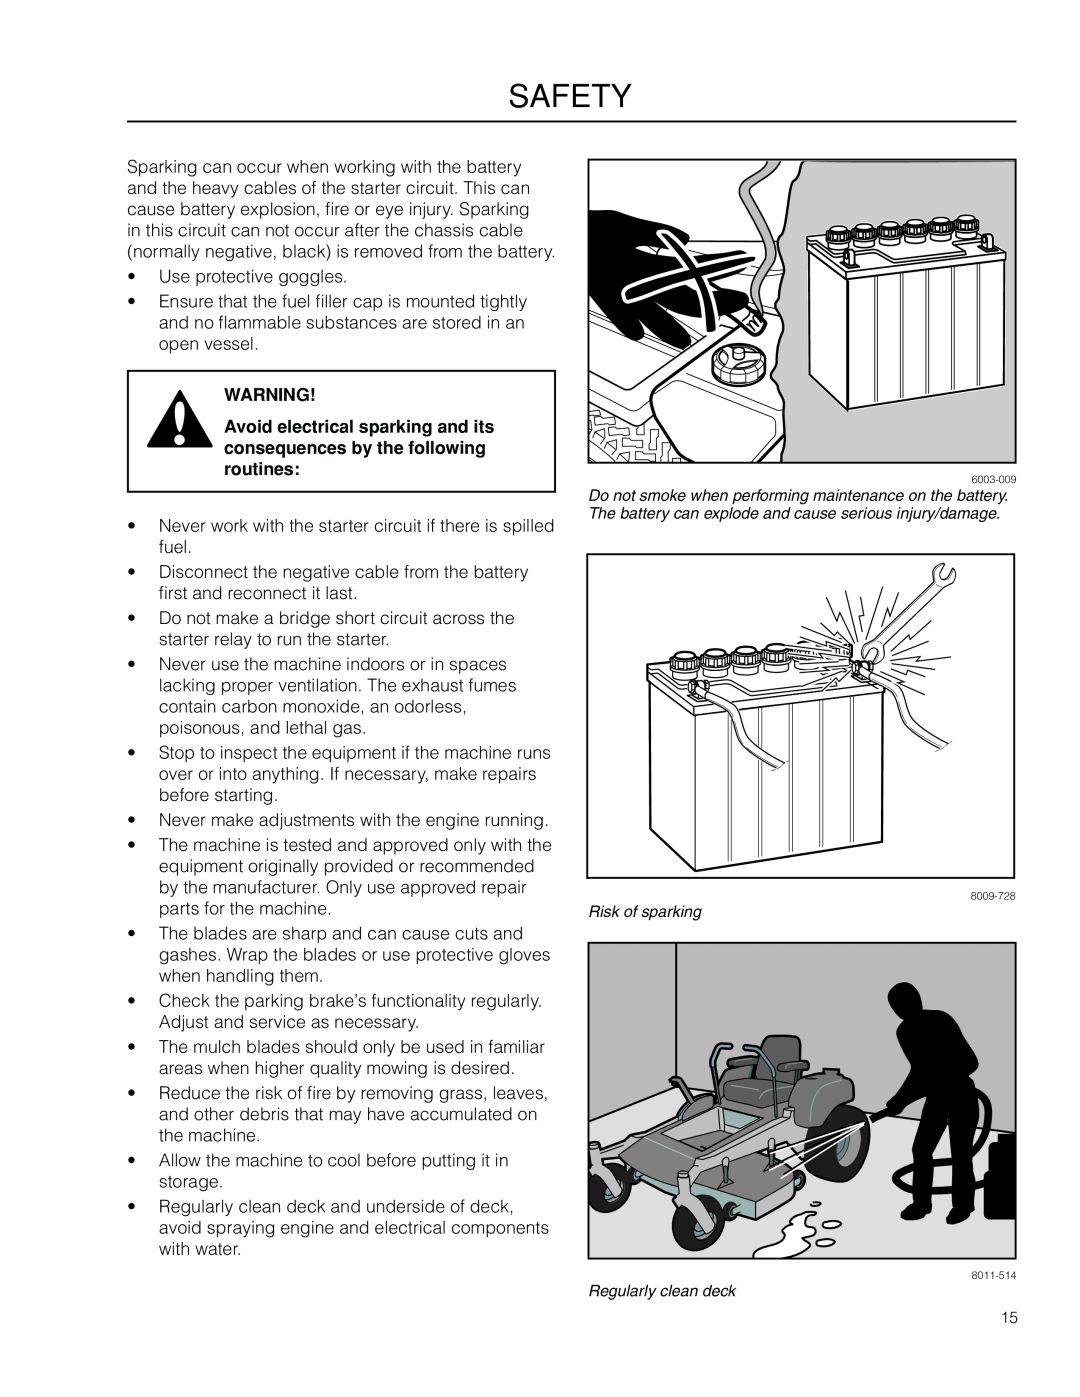 Husqvarna RZ19 CE / 966658901 manual Safety, Use protective goggles 